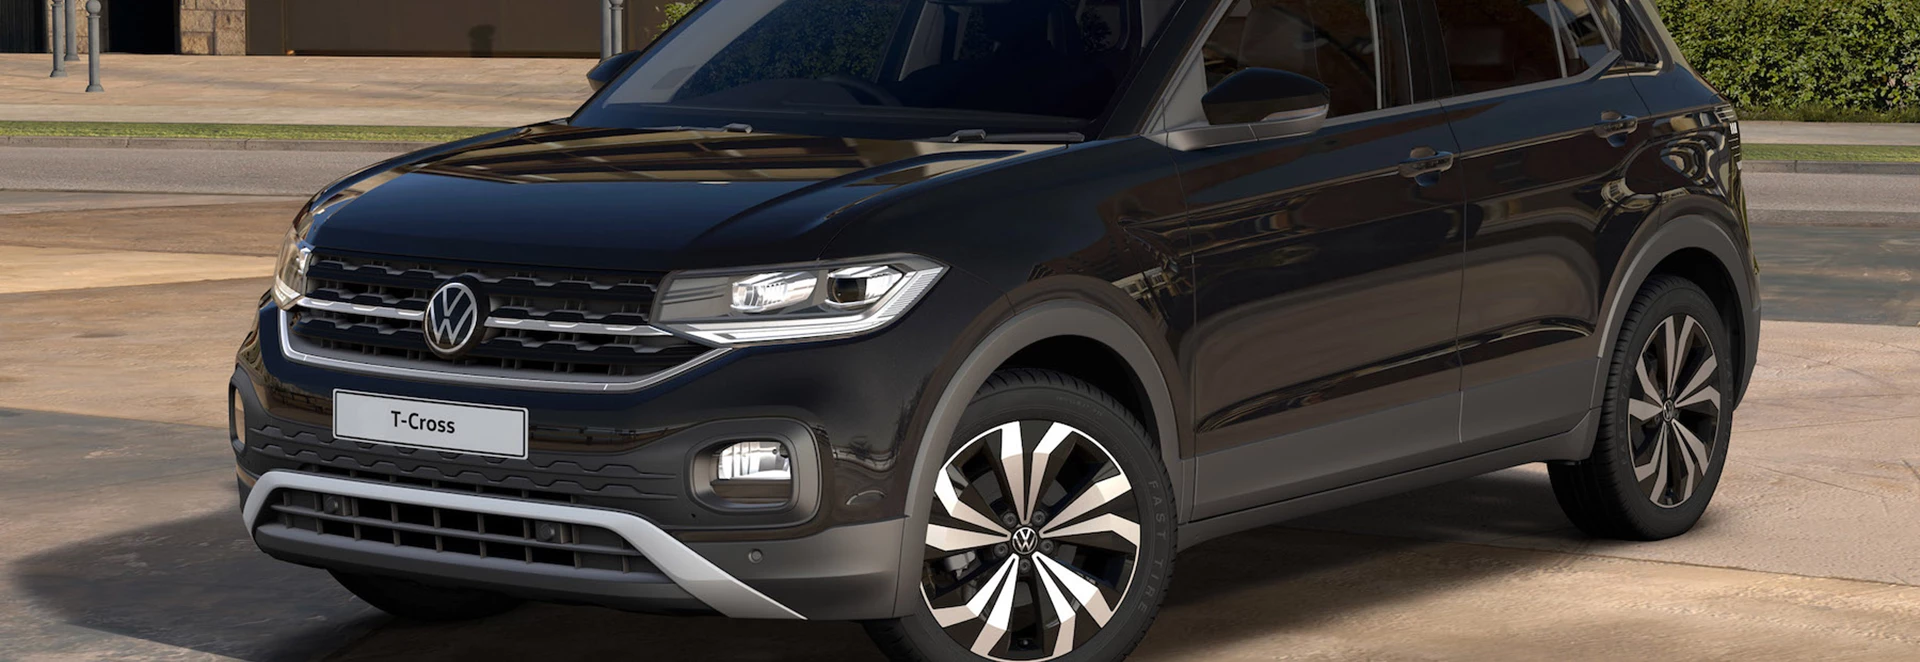 Volkswagen introduces new Black Edition grade to T-Cross range 